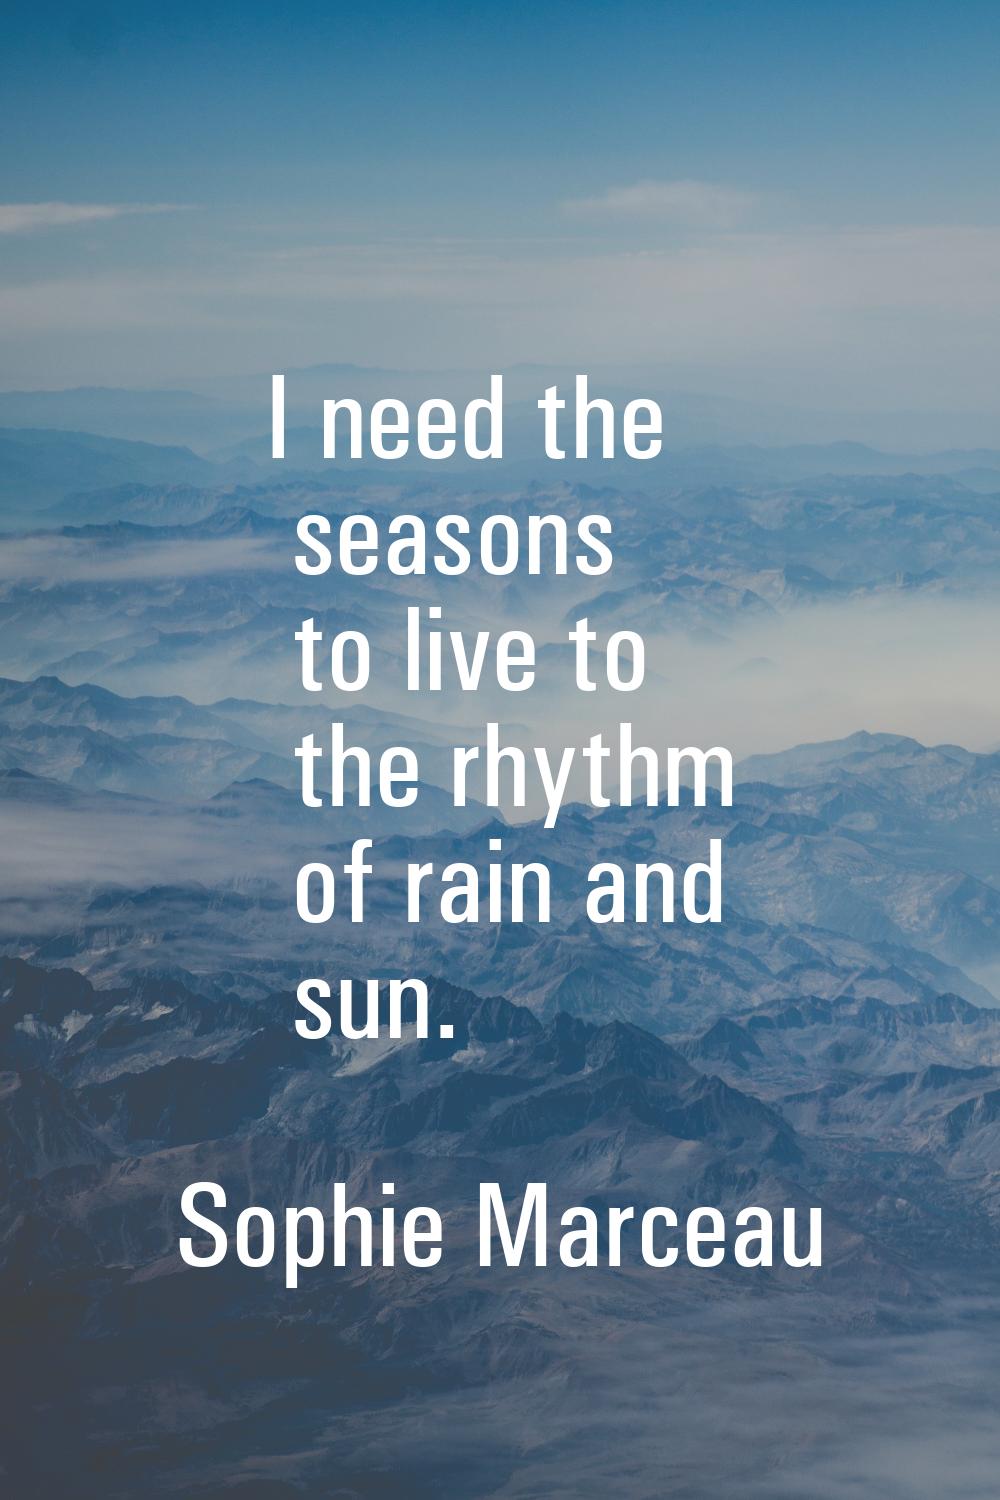 I need the seasons to live to the rhythm of rain and sun.